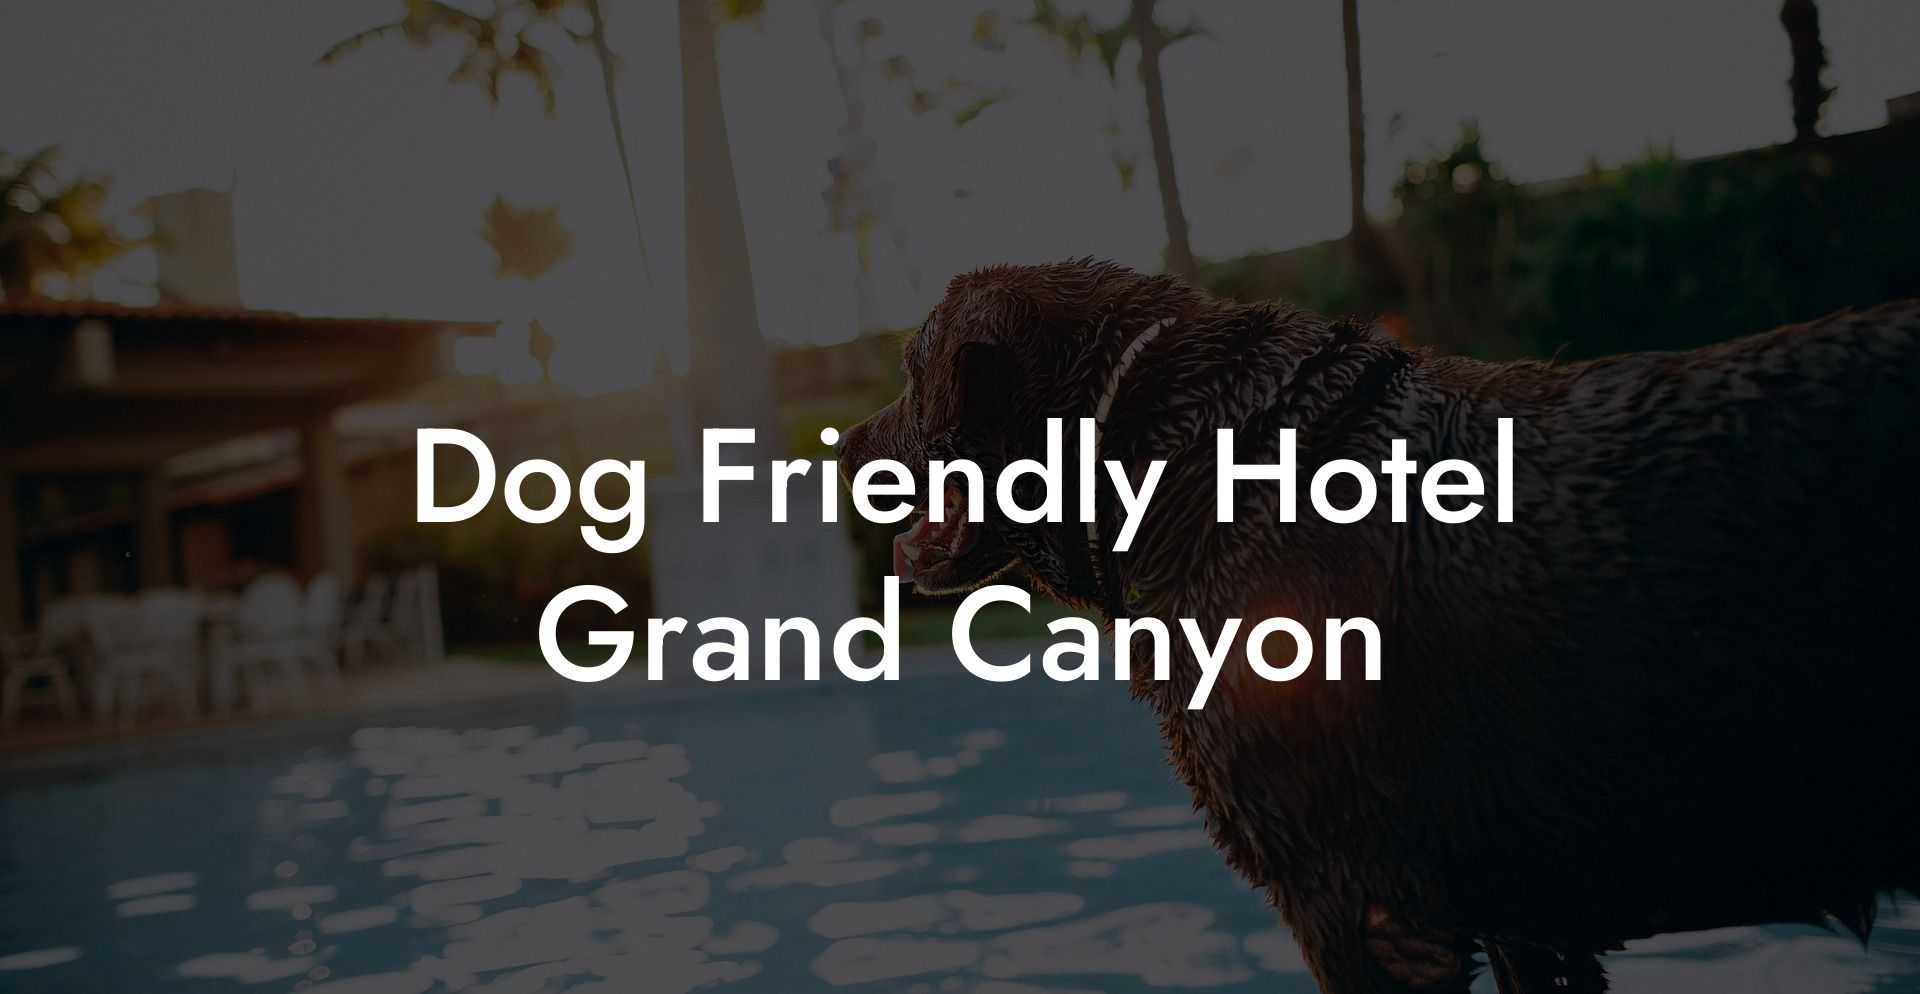 Dog Friendly Hotel Grand Canyon